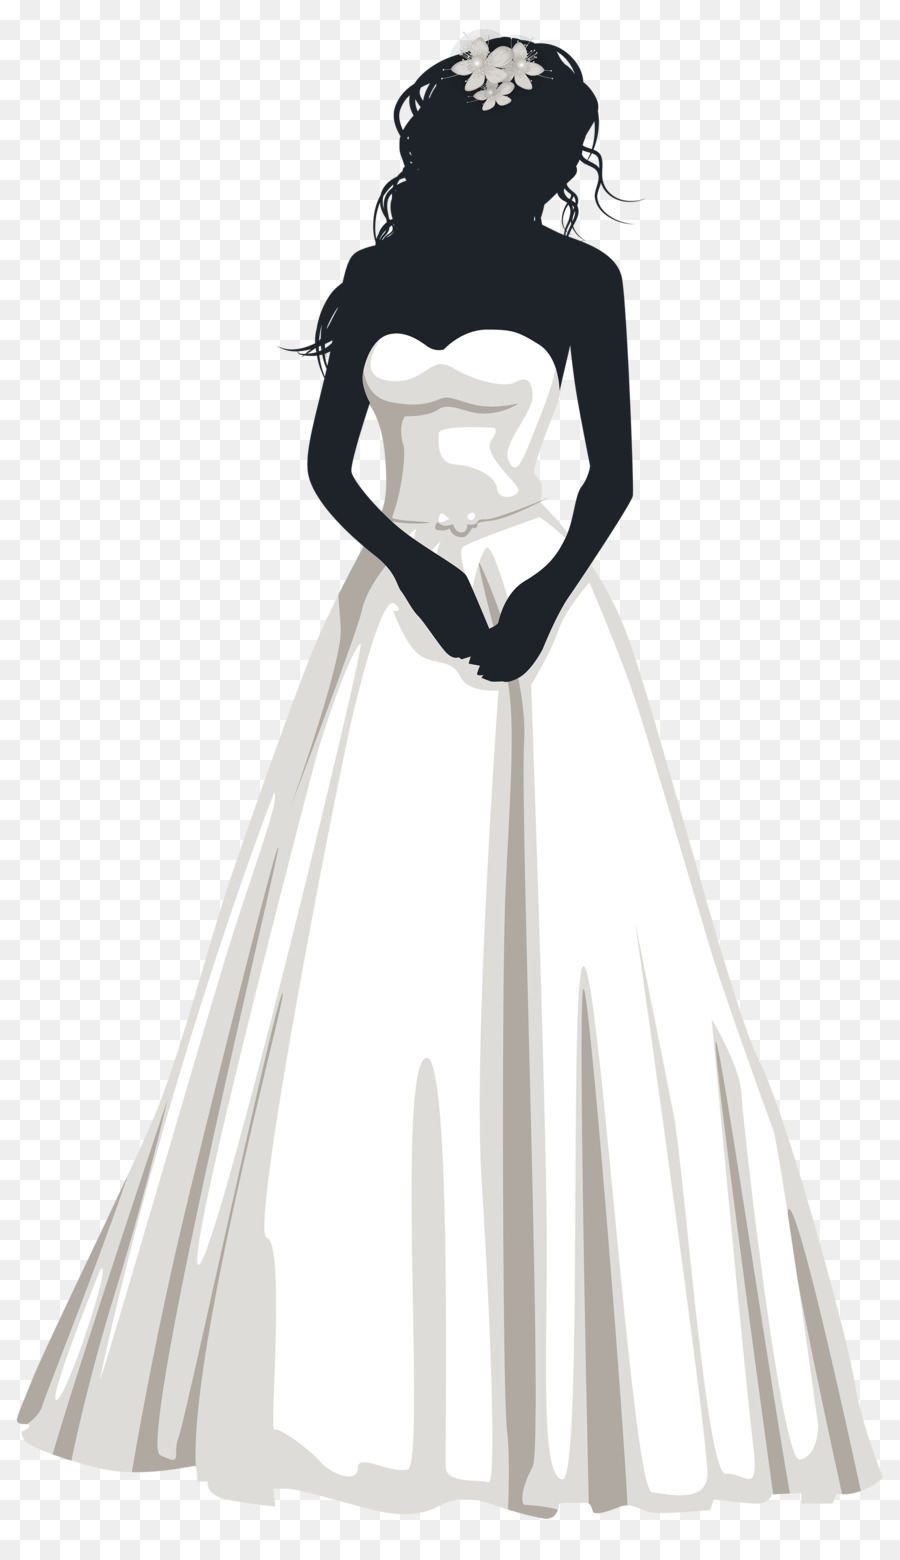 Bridegroom Wedding Clip art - bride groom png download - 2035*3500 - Free Transparent  png Download.